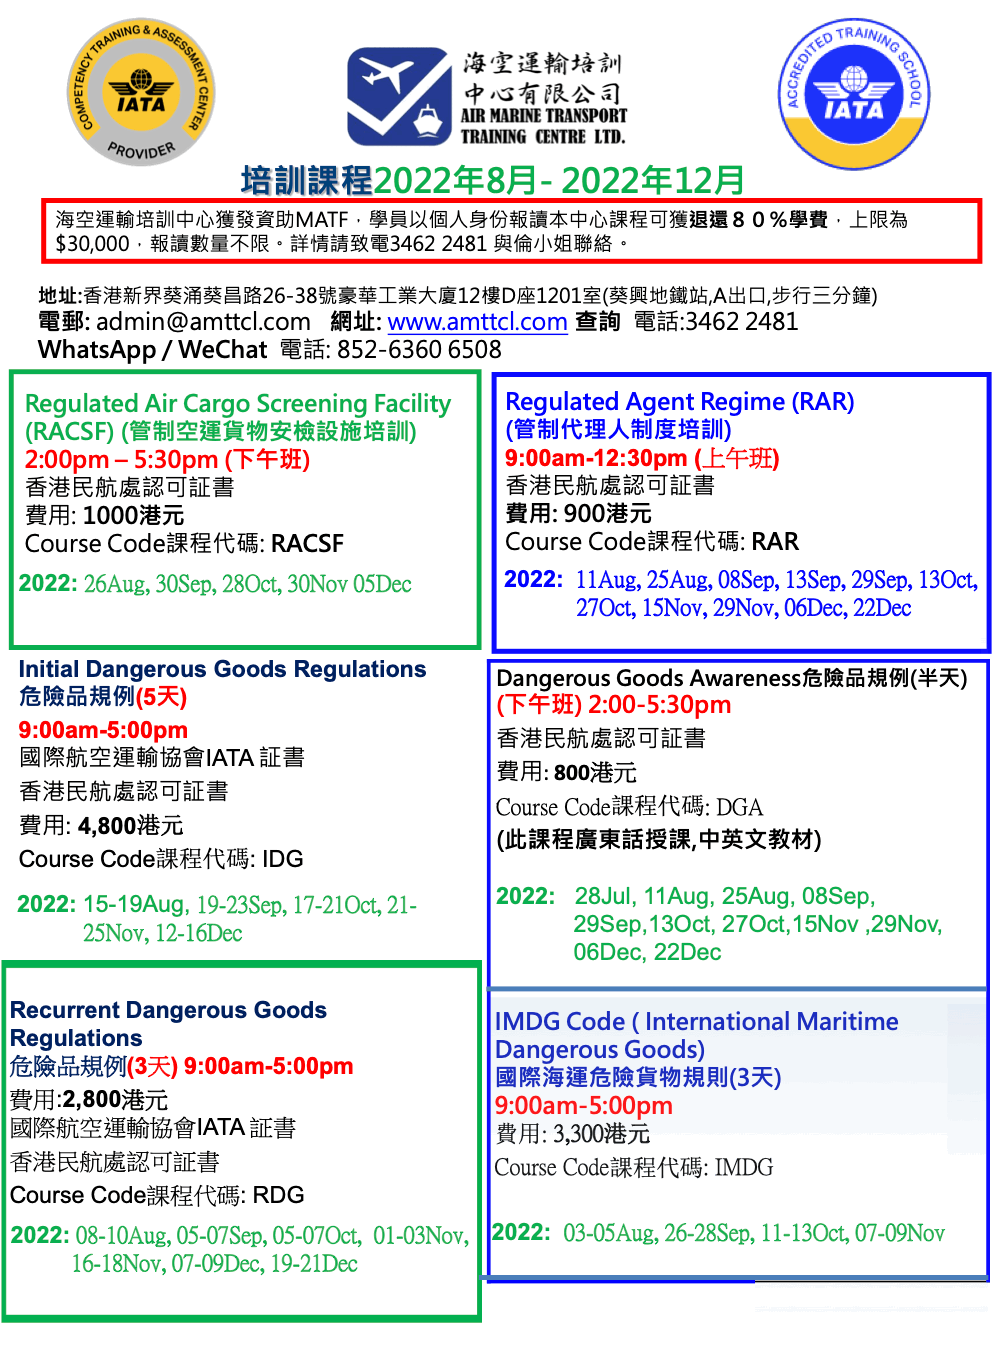 DG Class Schedules between August and December 2022